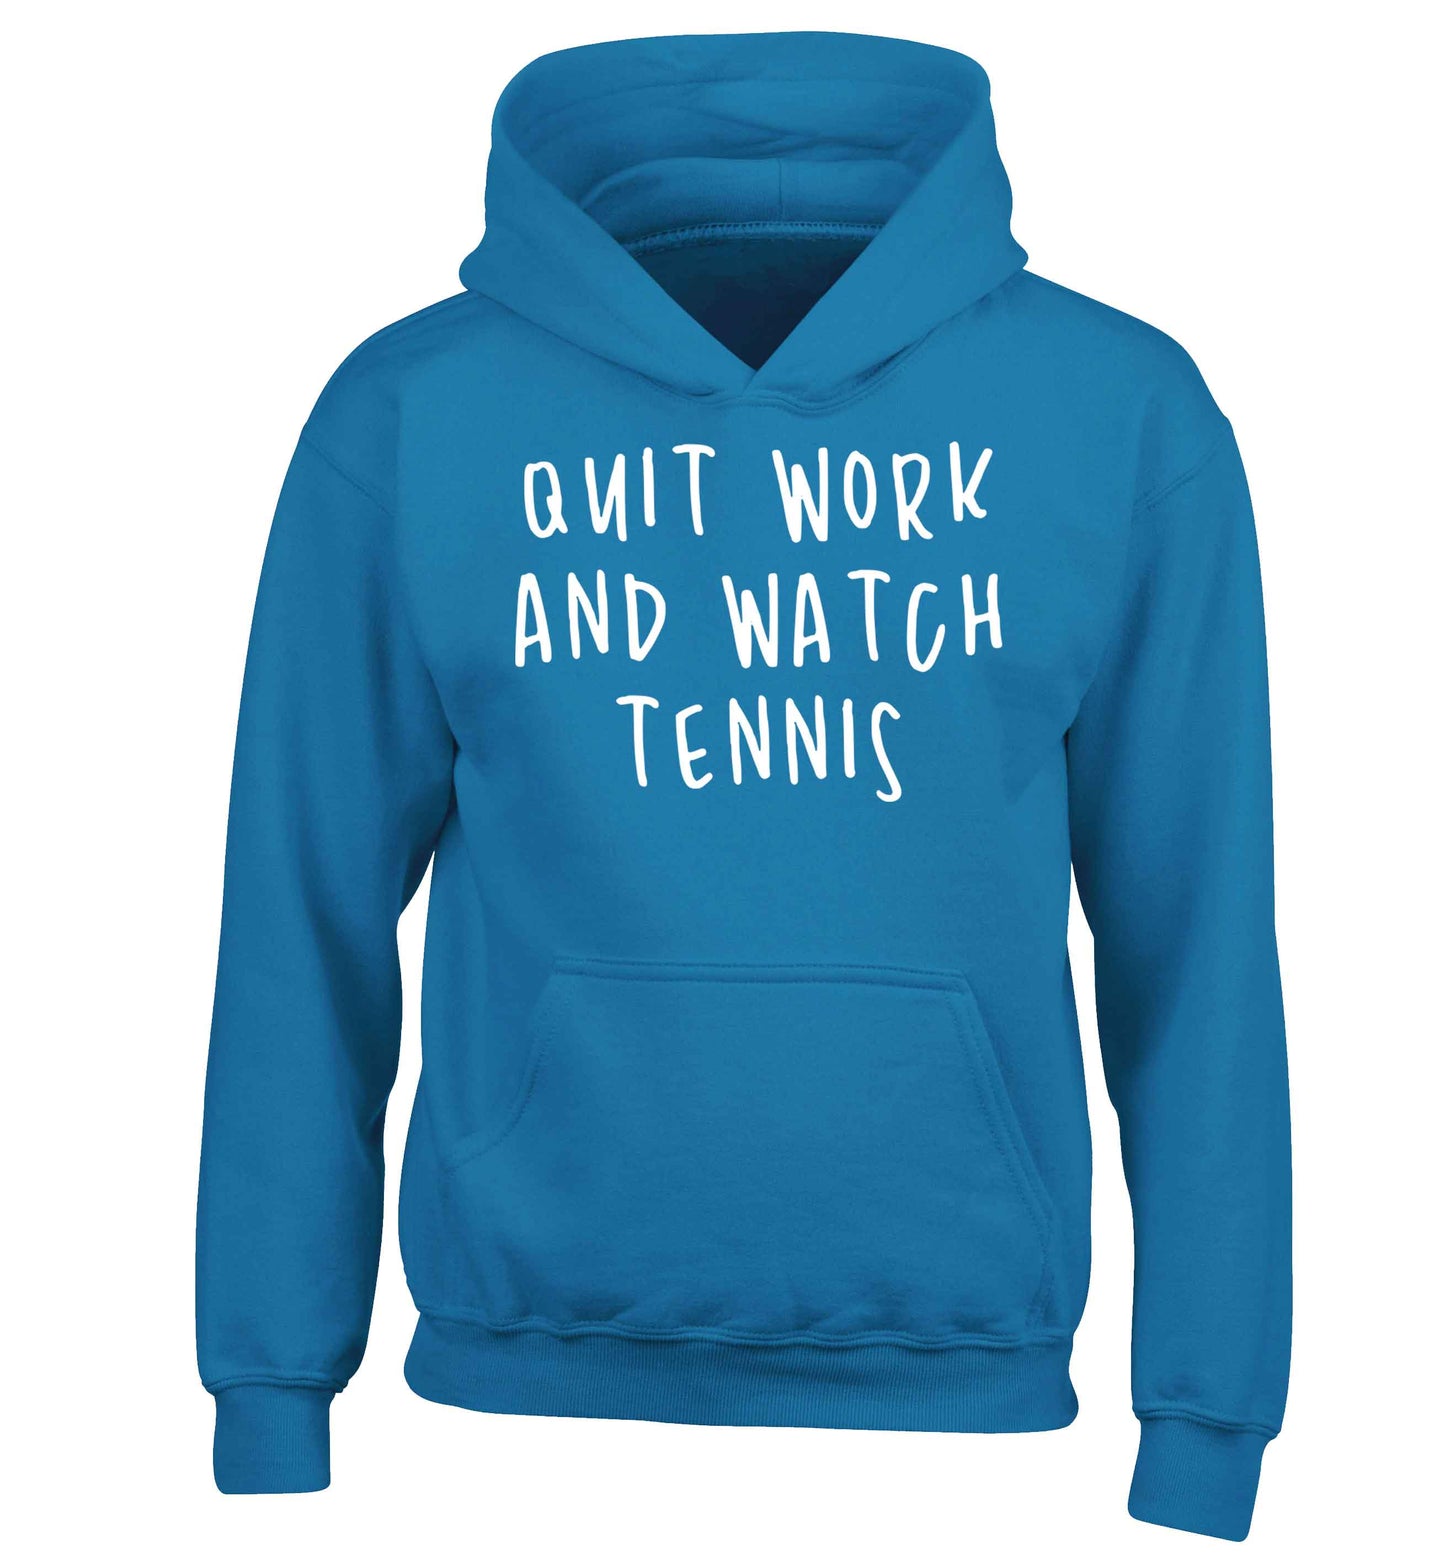 Quit work and watch tennis children's blue hoodie 12-13 Years